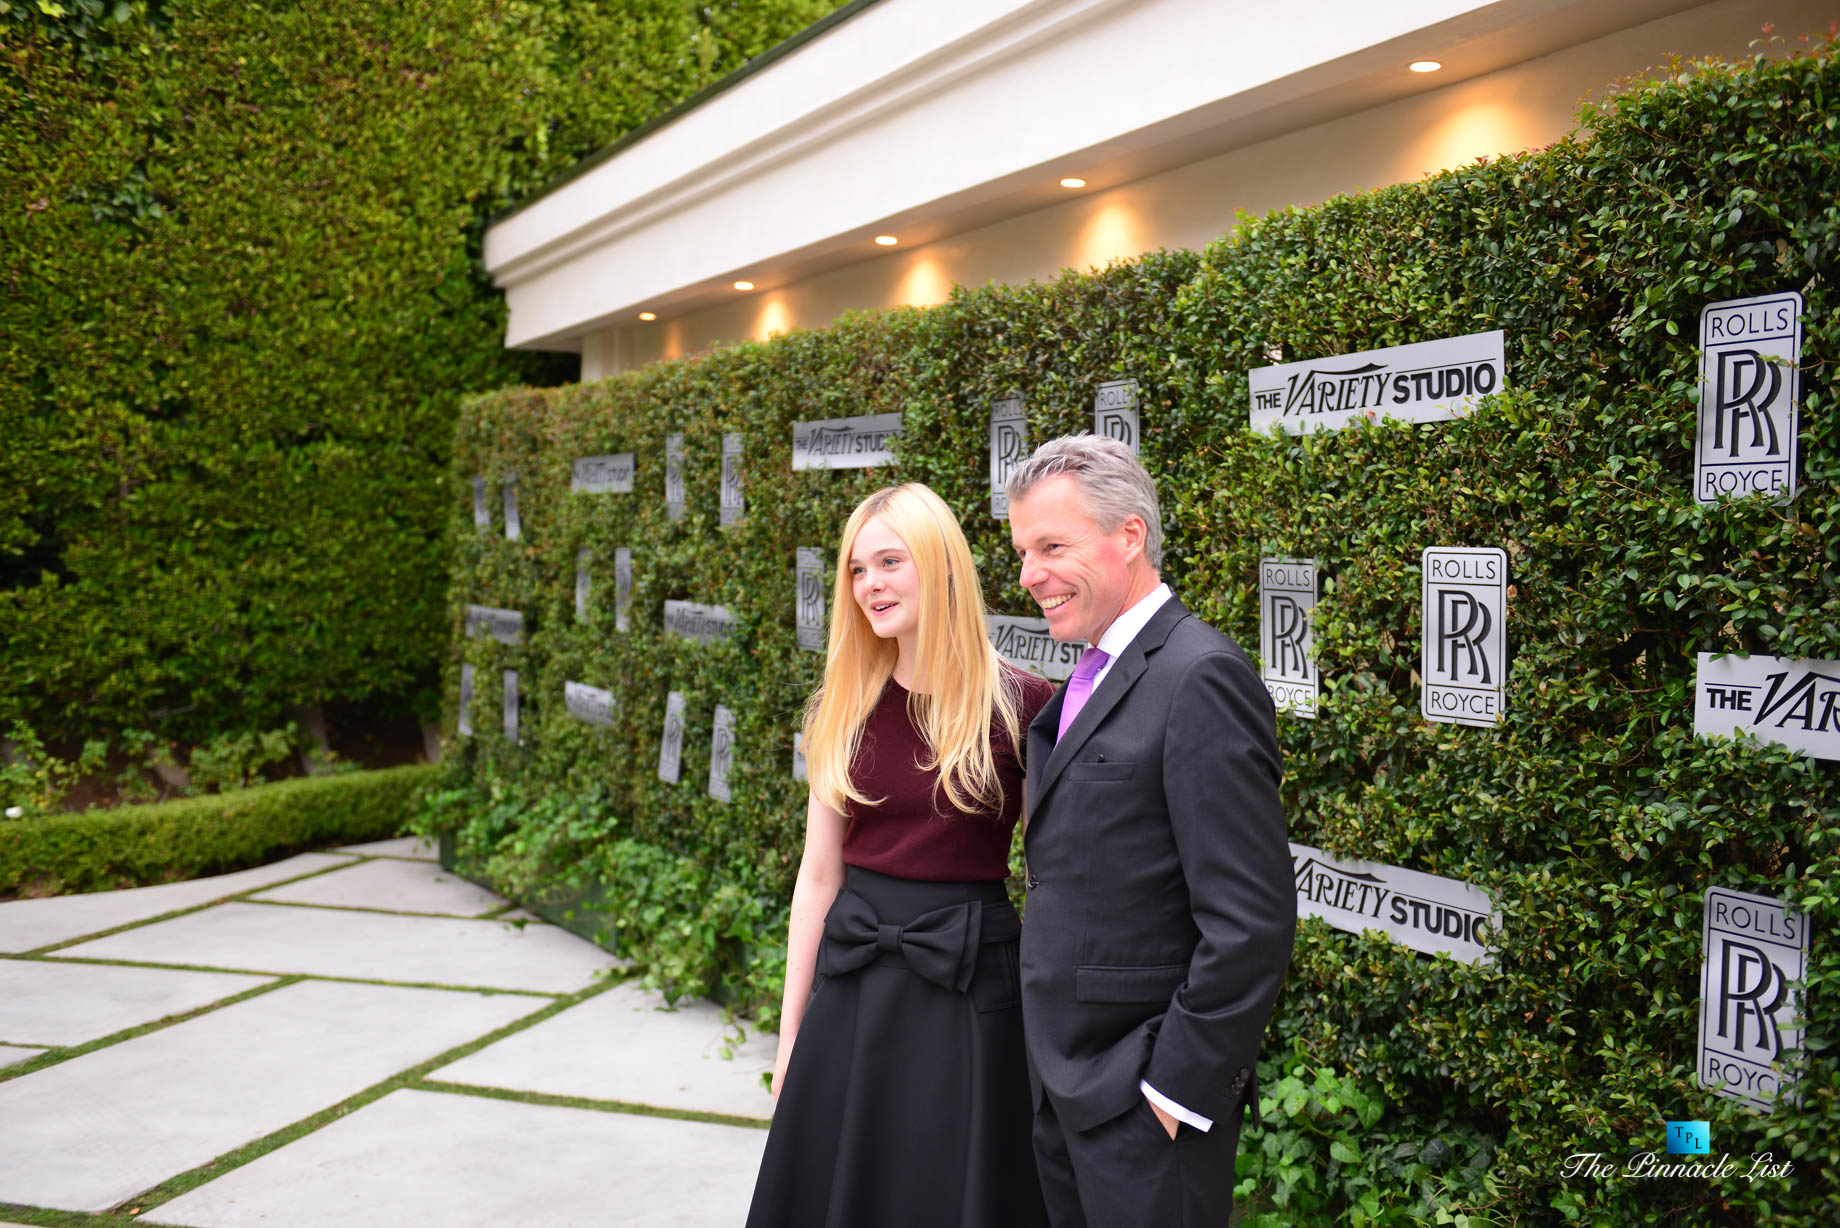 Elle Fanning - Torsten Muller-Oetvoes - Rolls-Royce Hosts The Variety Studio Event in Beverly Hills, California